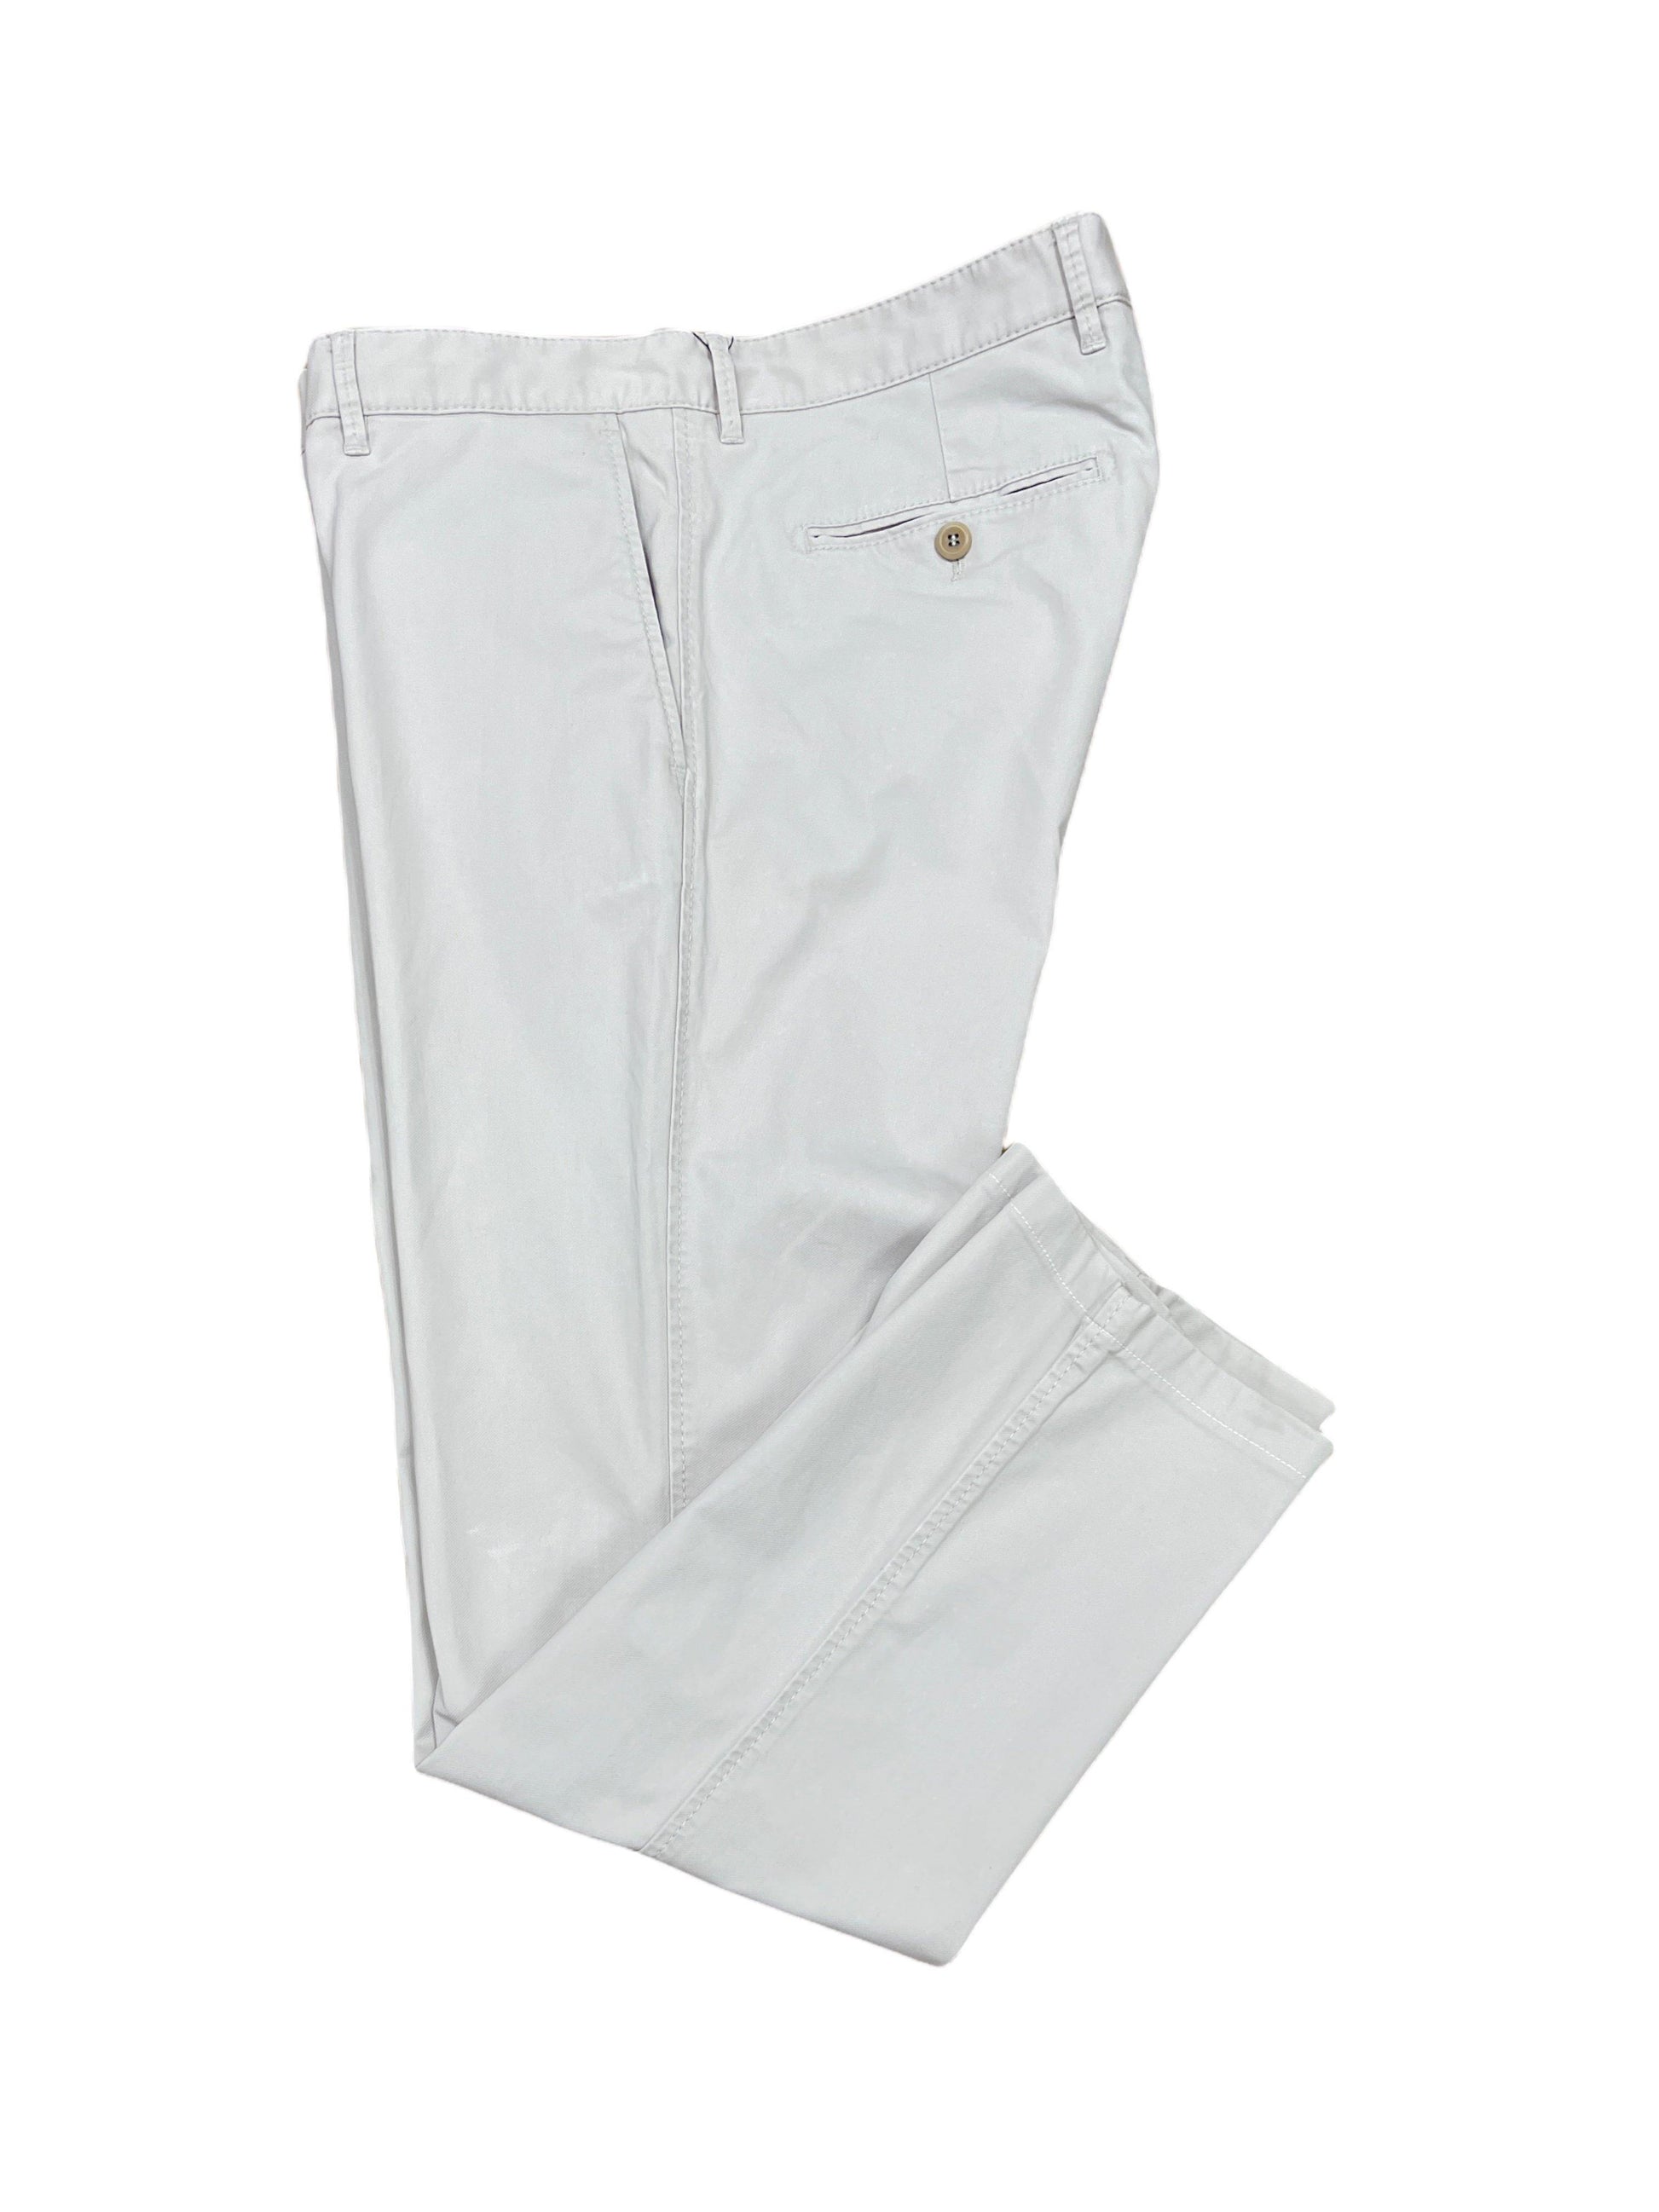 Brax Light Stone Grey Cotton Pants size 52/36. Genuine Design luxury 